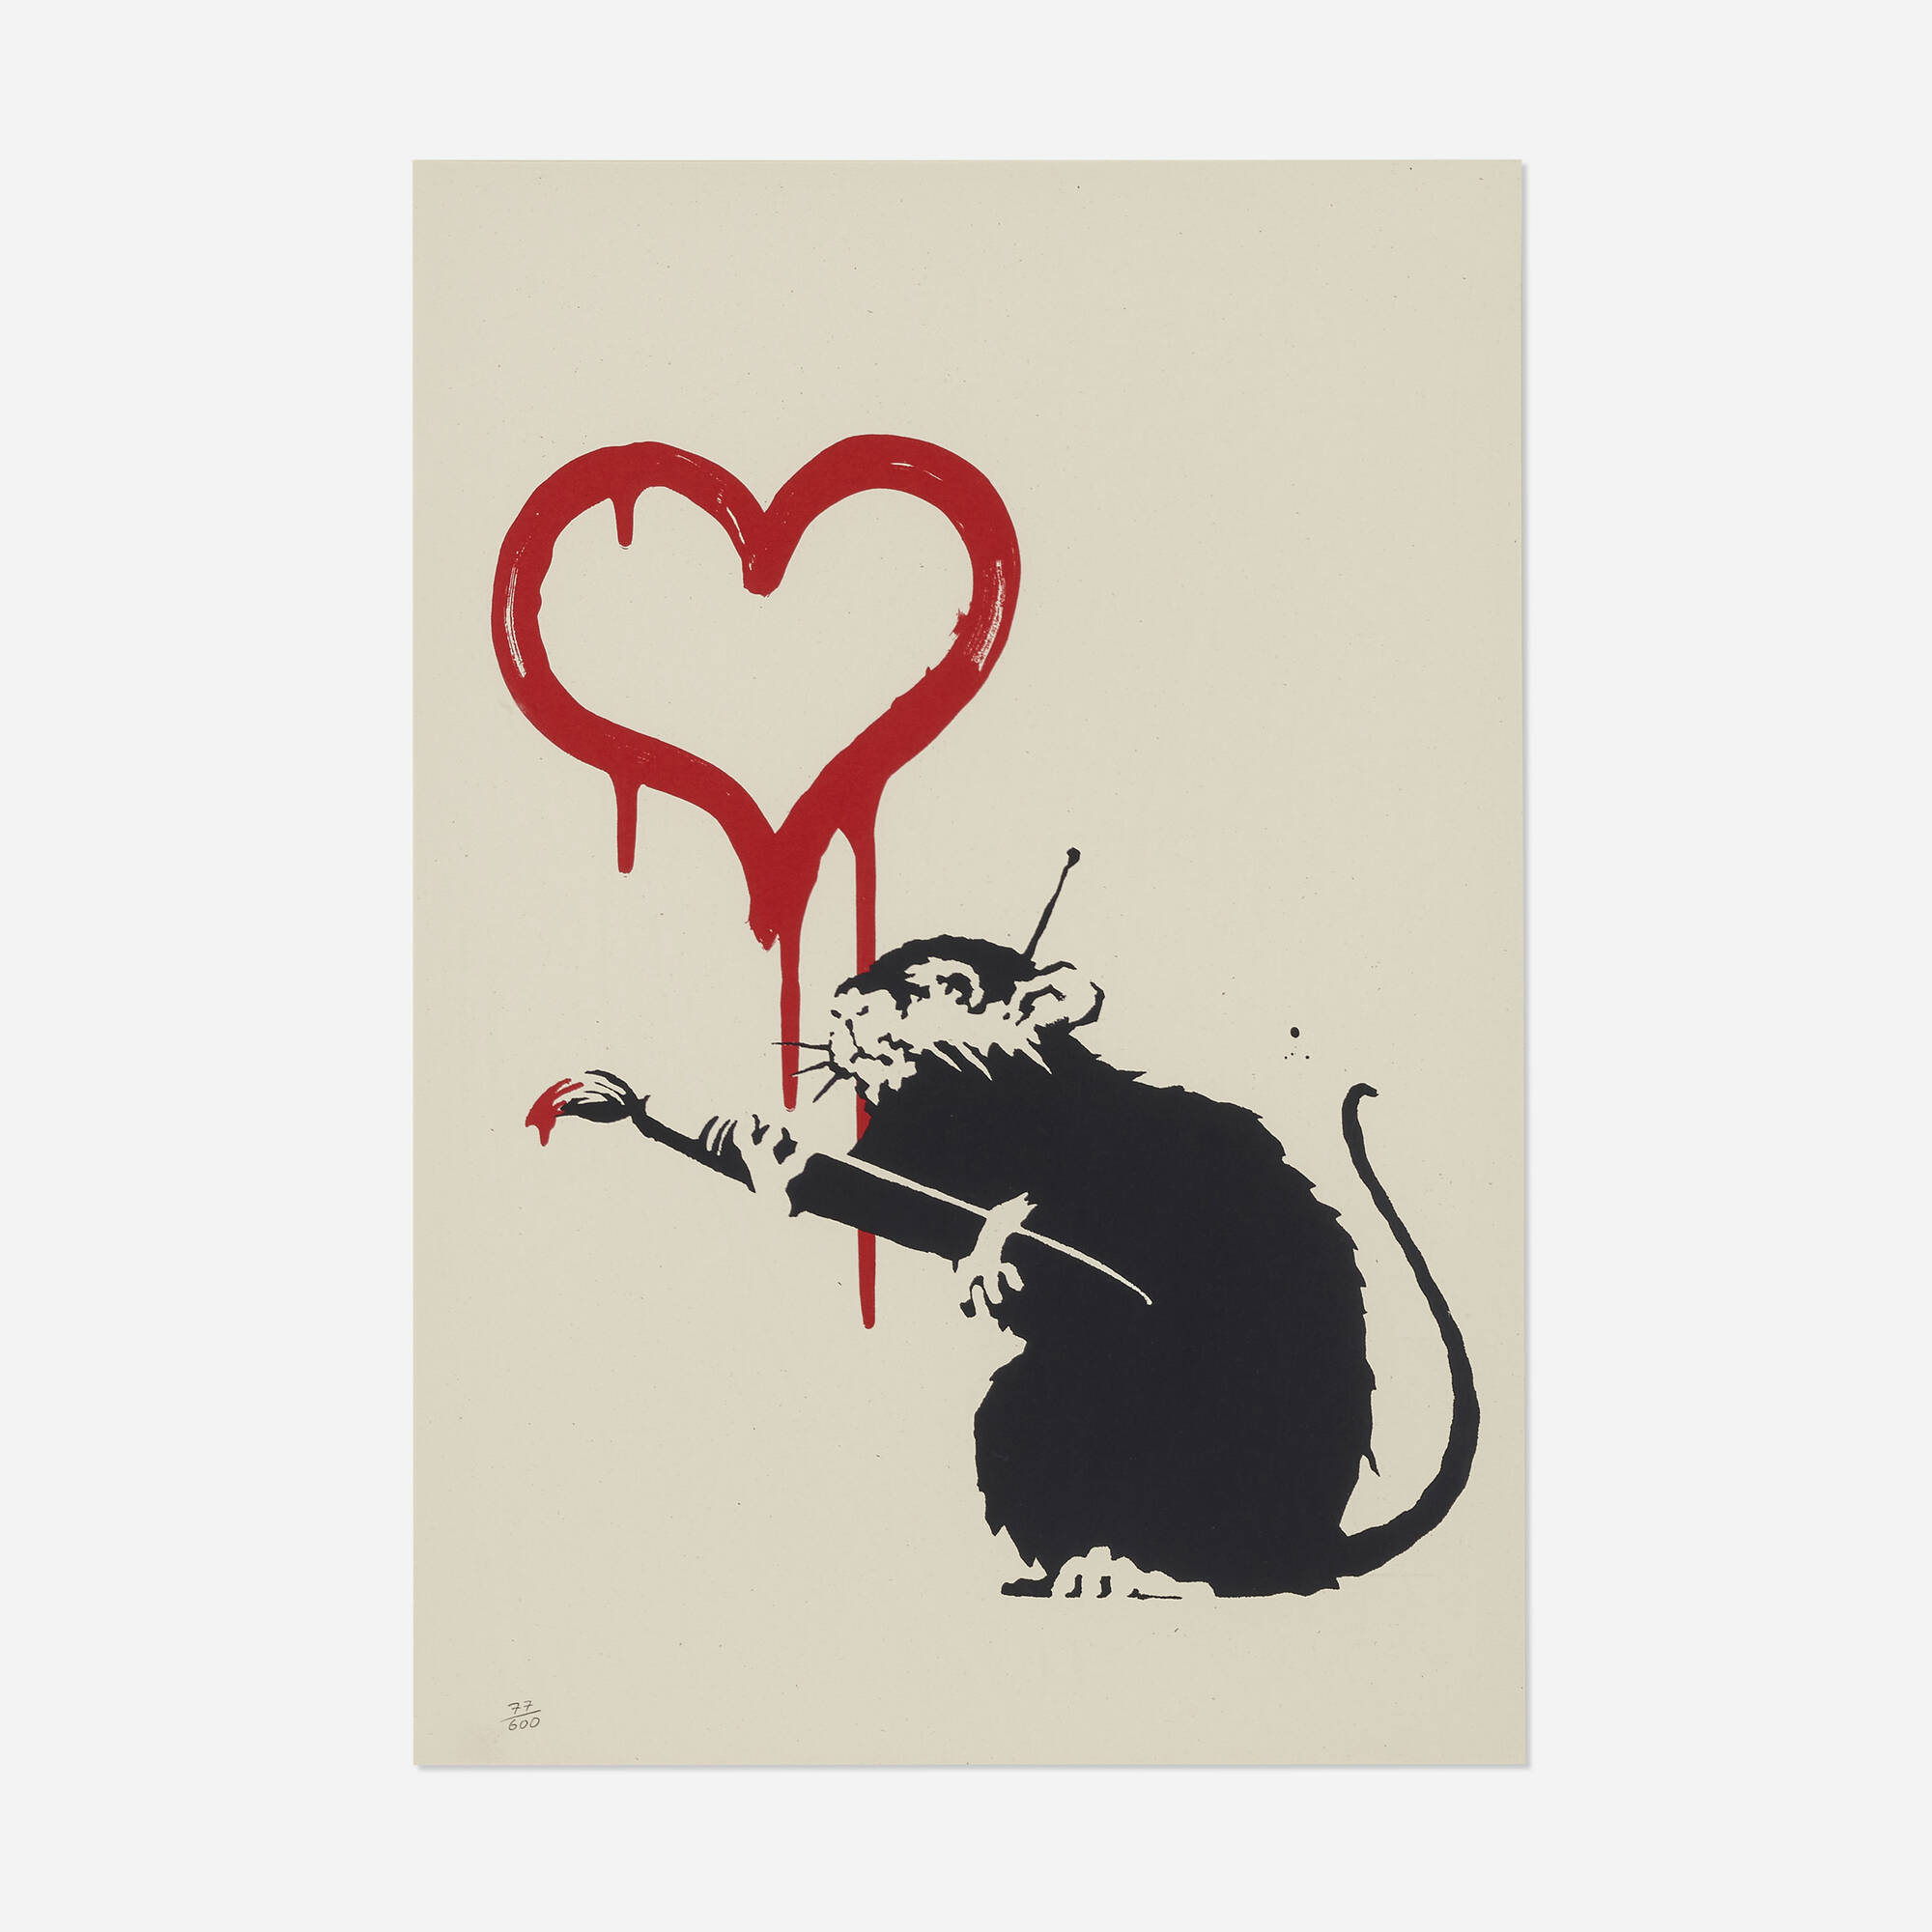 107: BANKSY, Love Rat < Contemporary + Collectible, 28 September 